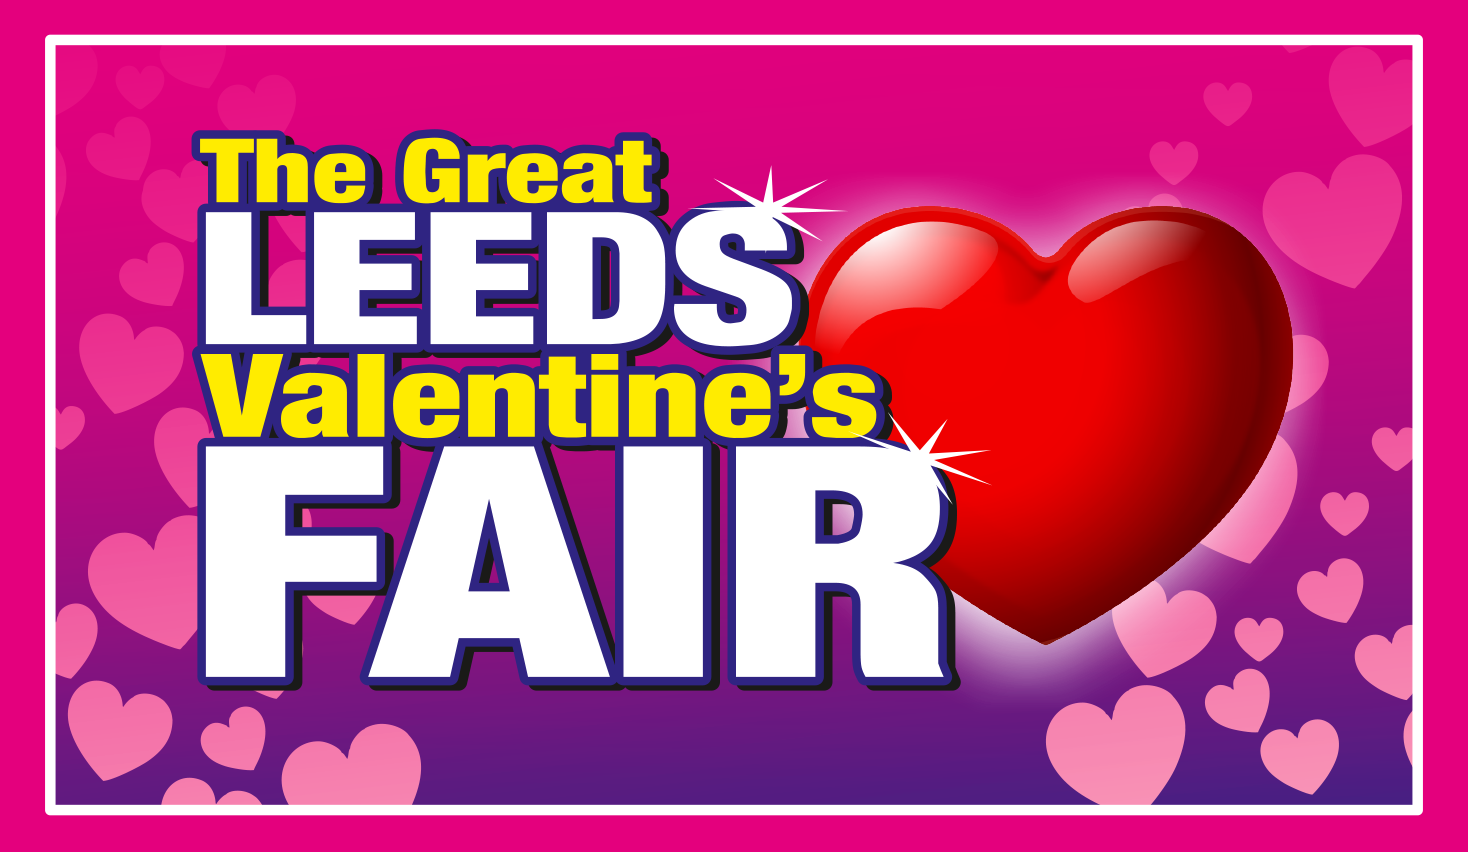 Leeds Valentine’s Fair